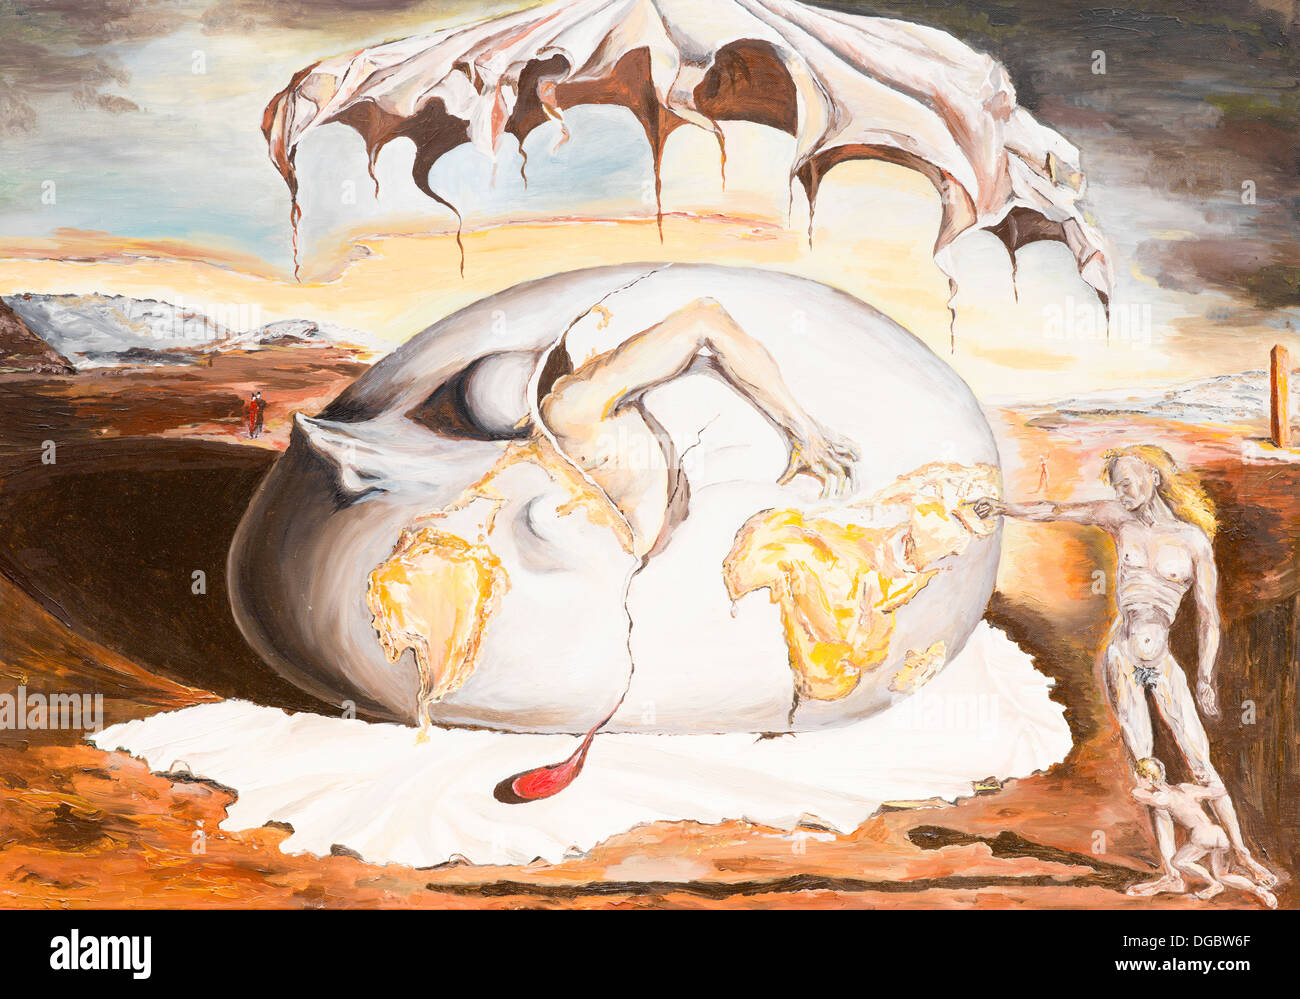 Pintura al óleo illustrationg una réplica de un famoso cuadro realizado por Salvador Dalí Foto de stock